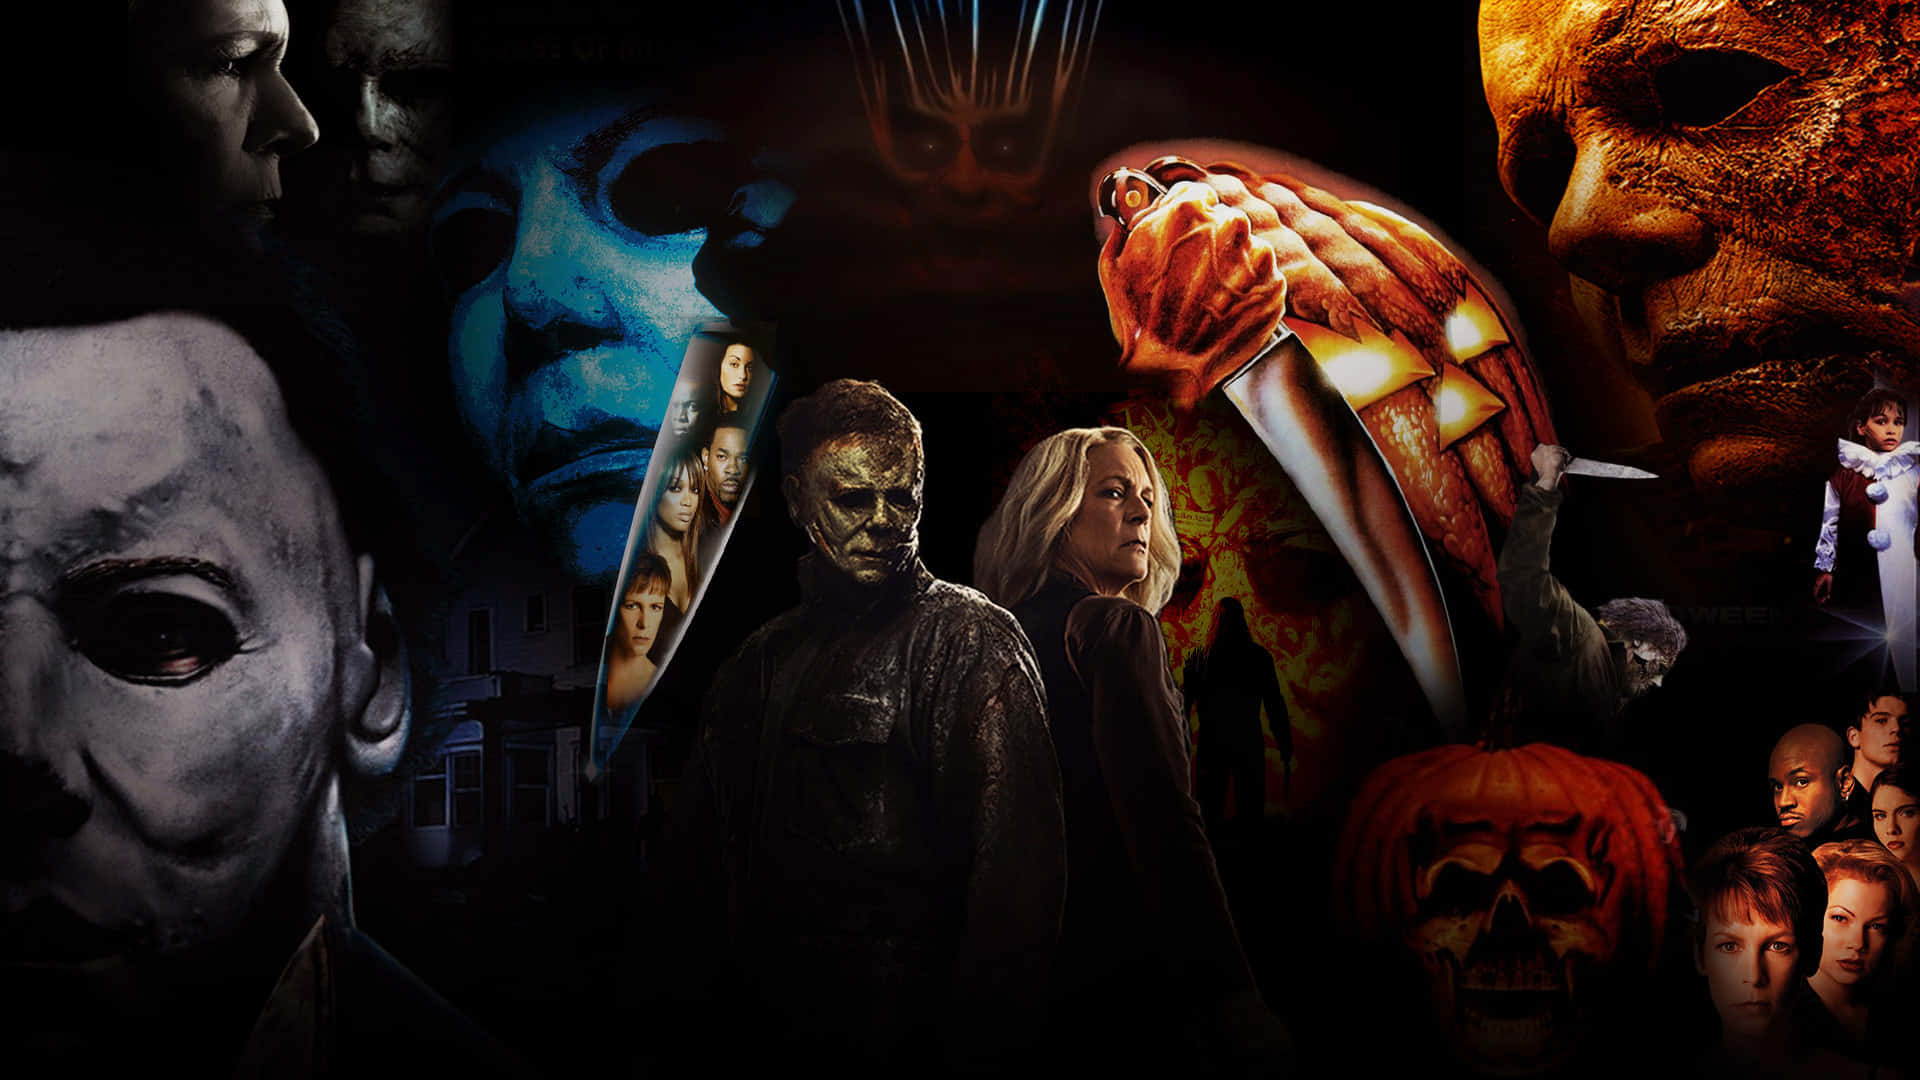 Halloweenmichael Myers Gesichter Wallpaper